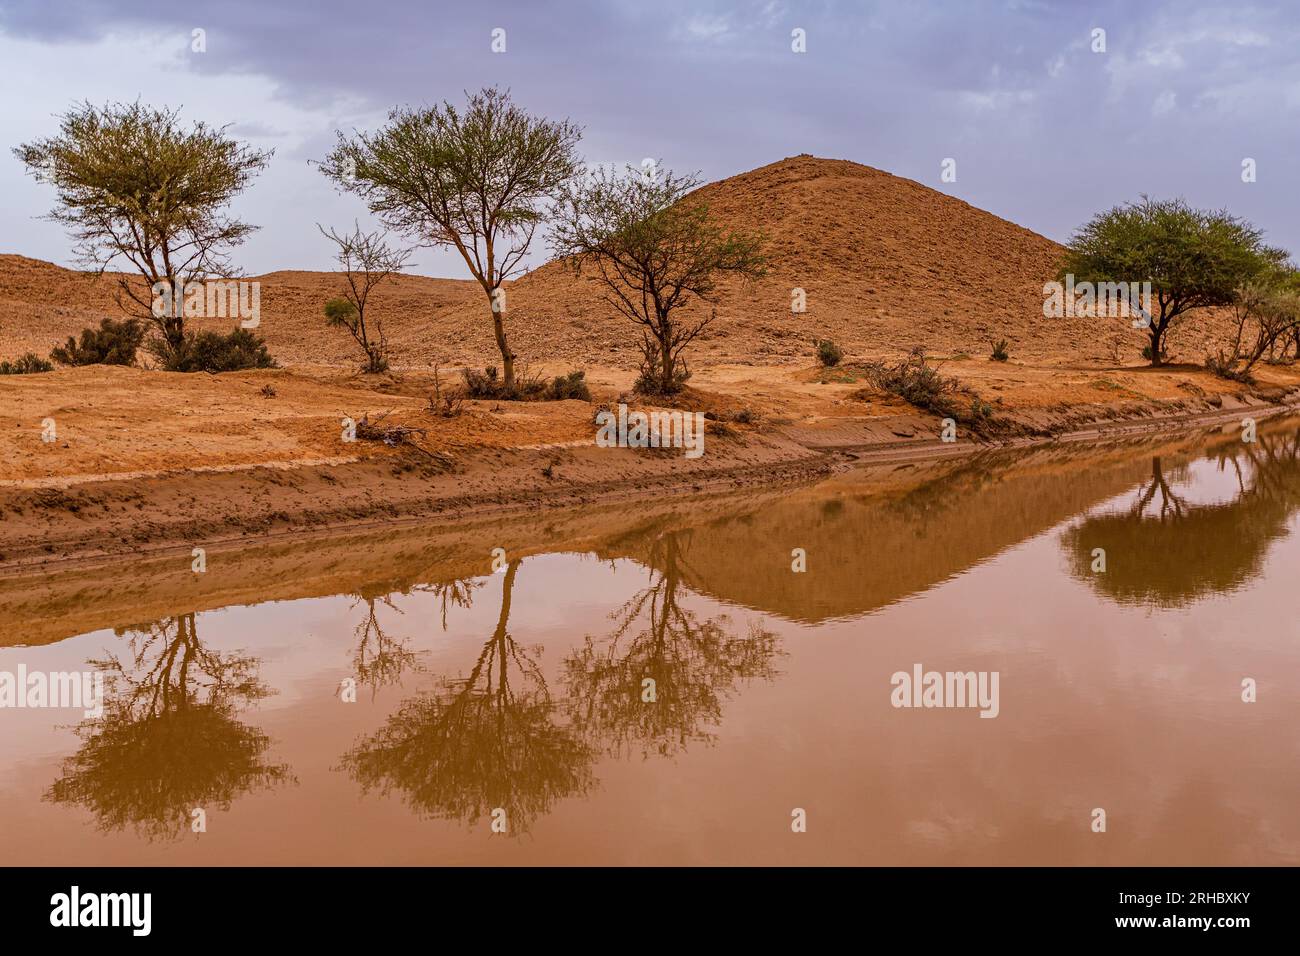 Flooded desert landscape, Saudi Arabia Stock Photo